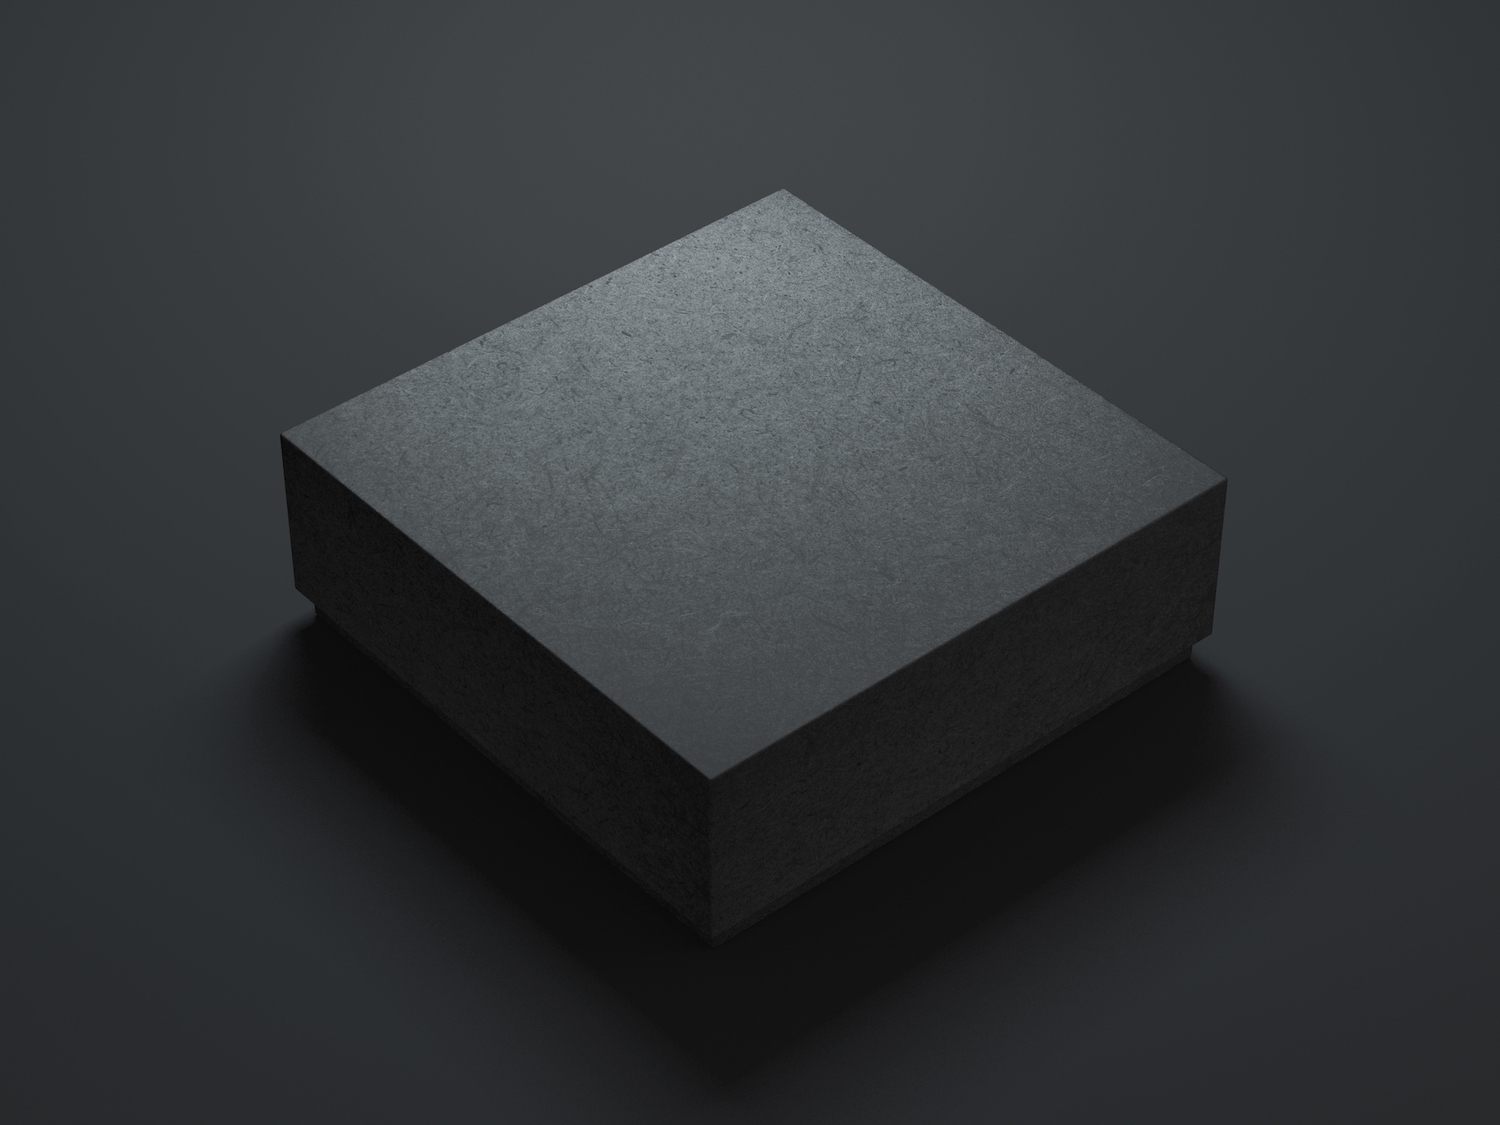 Square Black Box Mockup on dark background. 3d rendering